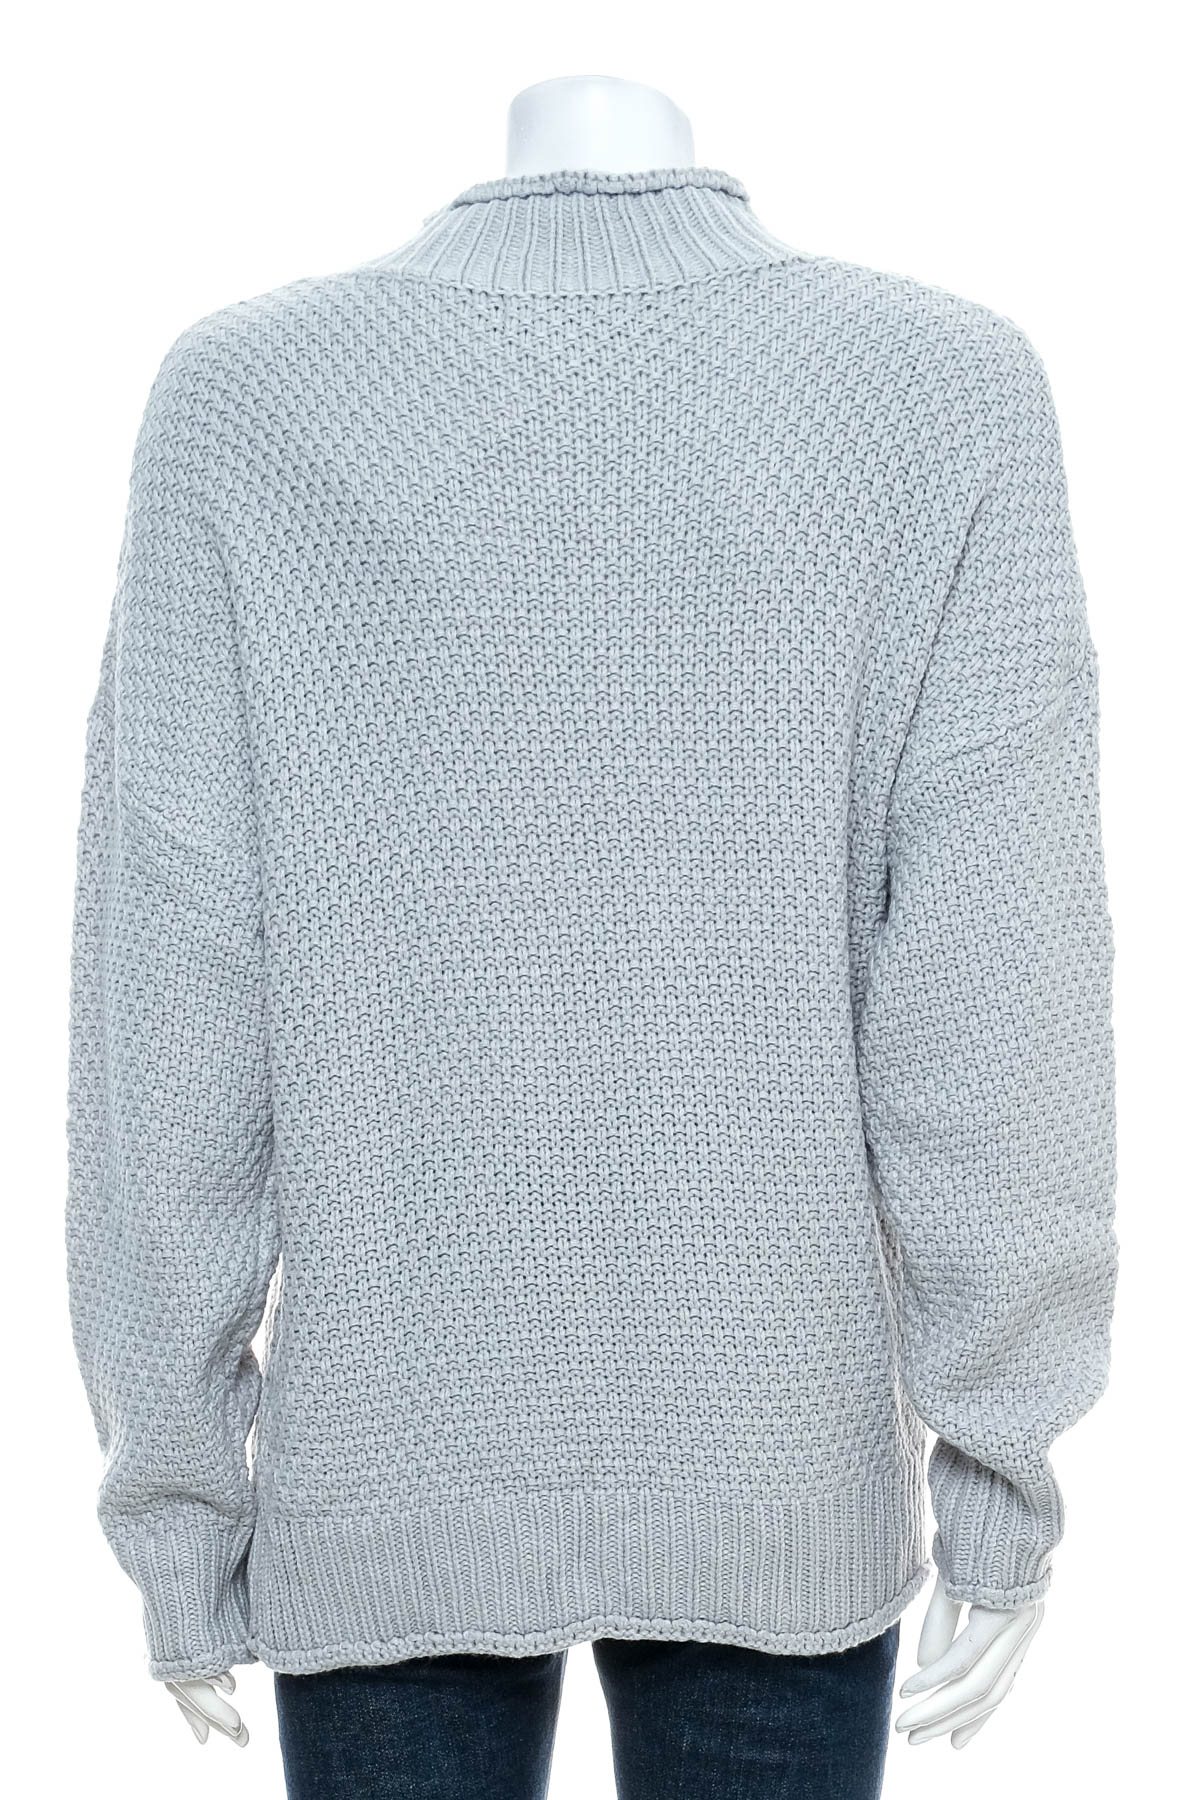 Women's sweater - Tecrew - 1